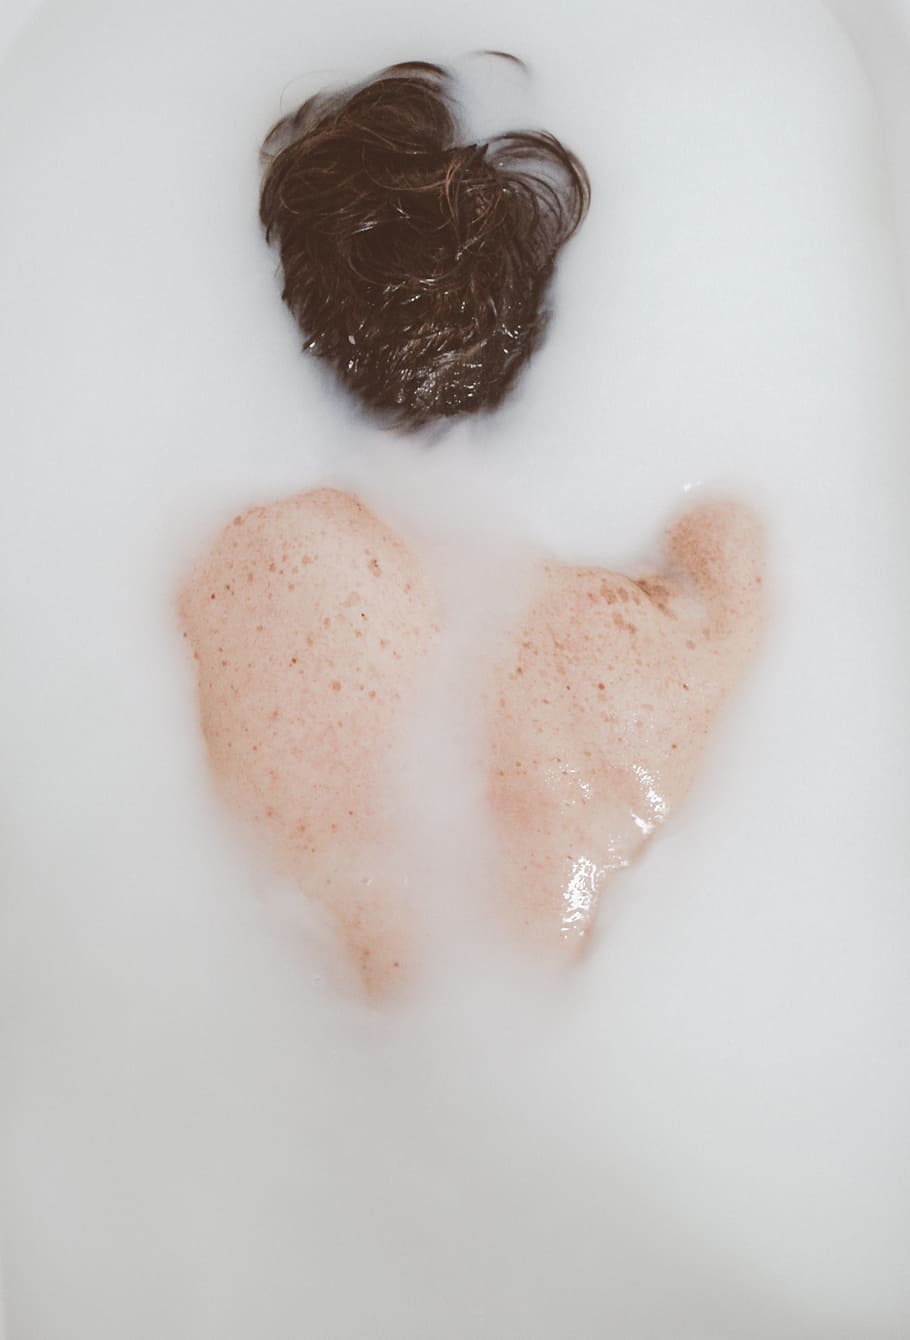 person bathing on milk, people, man, white, skin, water, bathtub